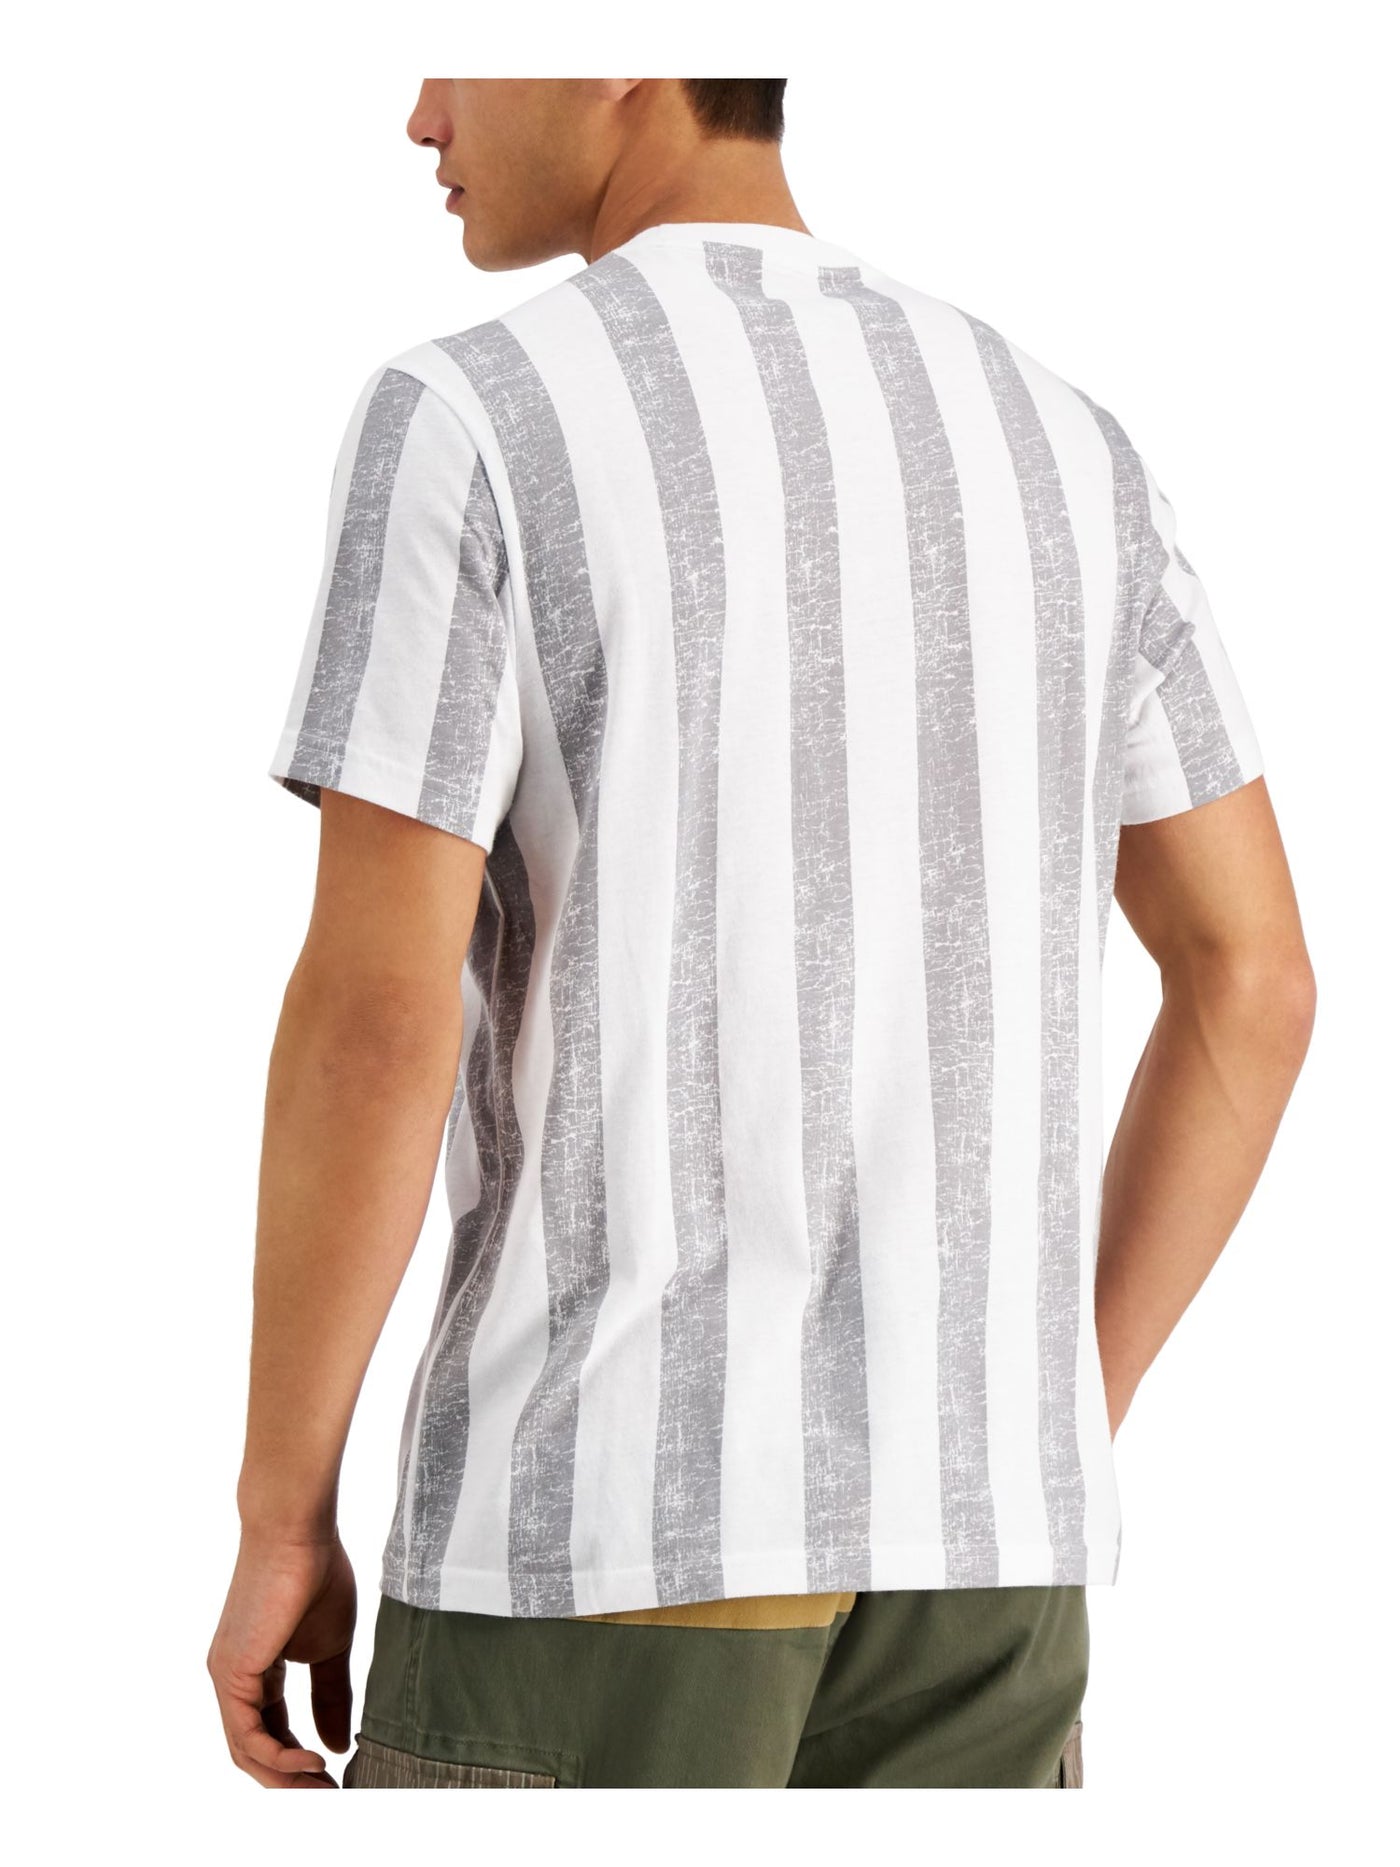 SUN STONE Mens Stars & Stripes White Lightweight, Pocket Striped Short Sleeve Classic Fit T-Shirt S